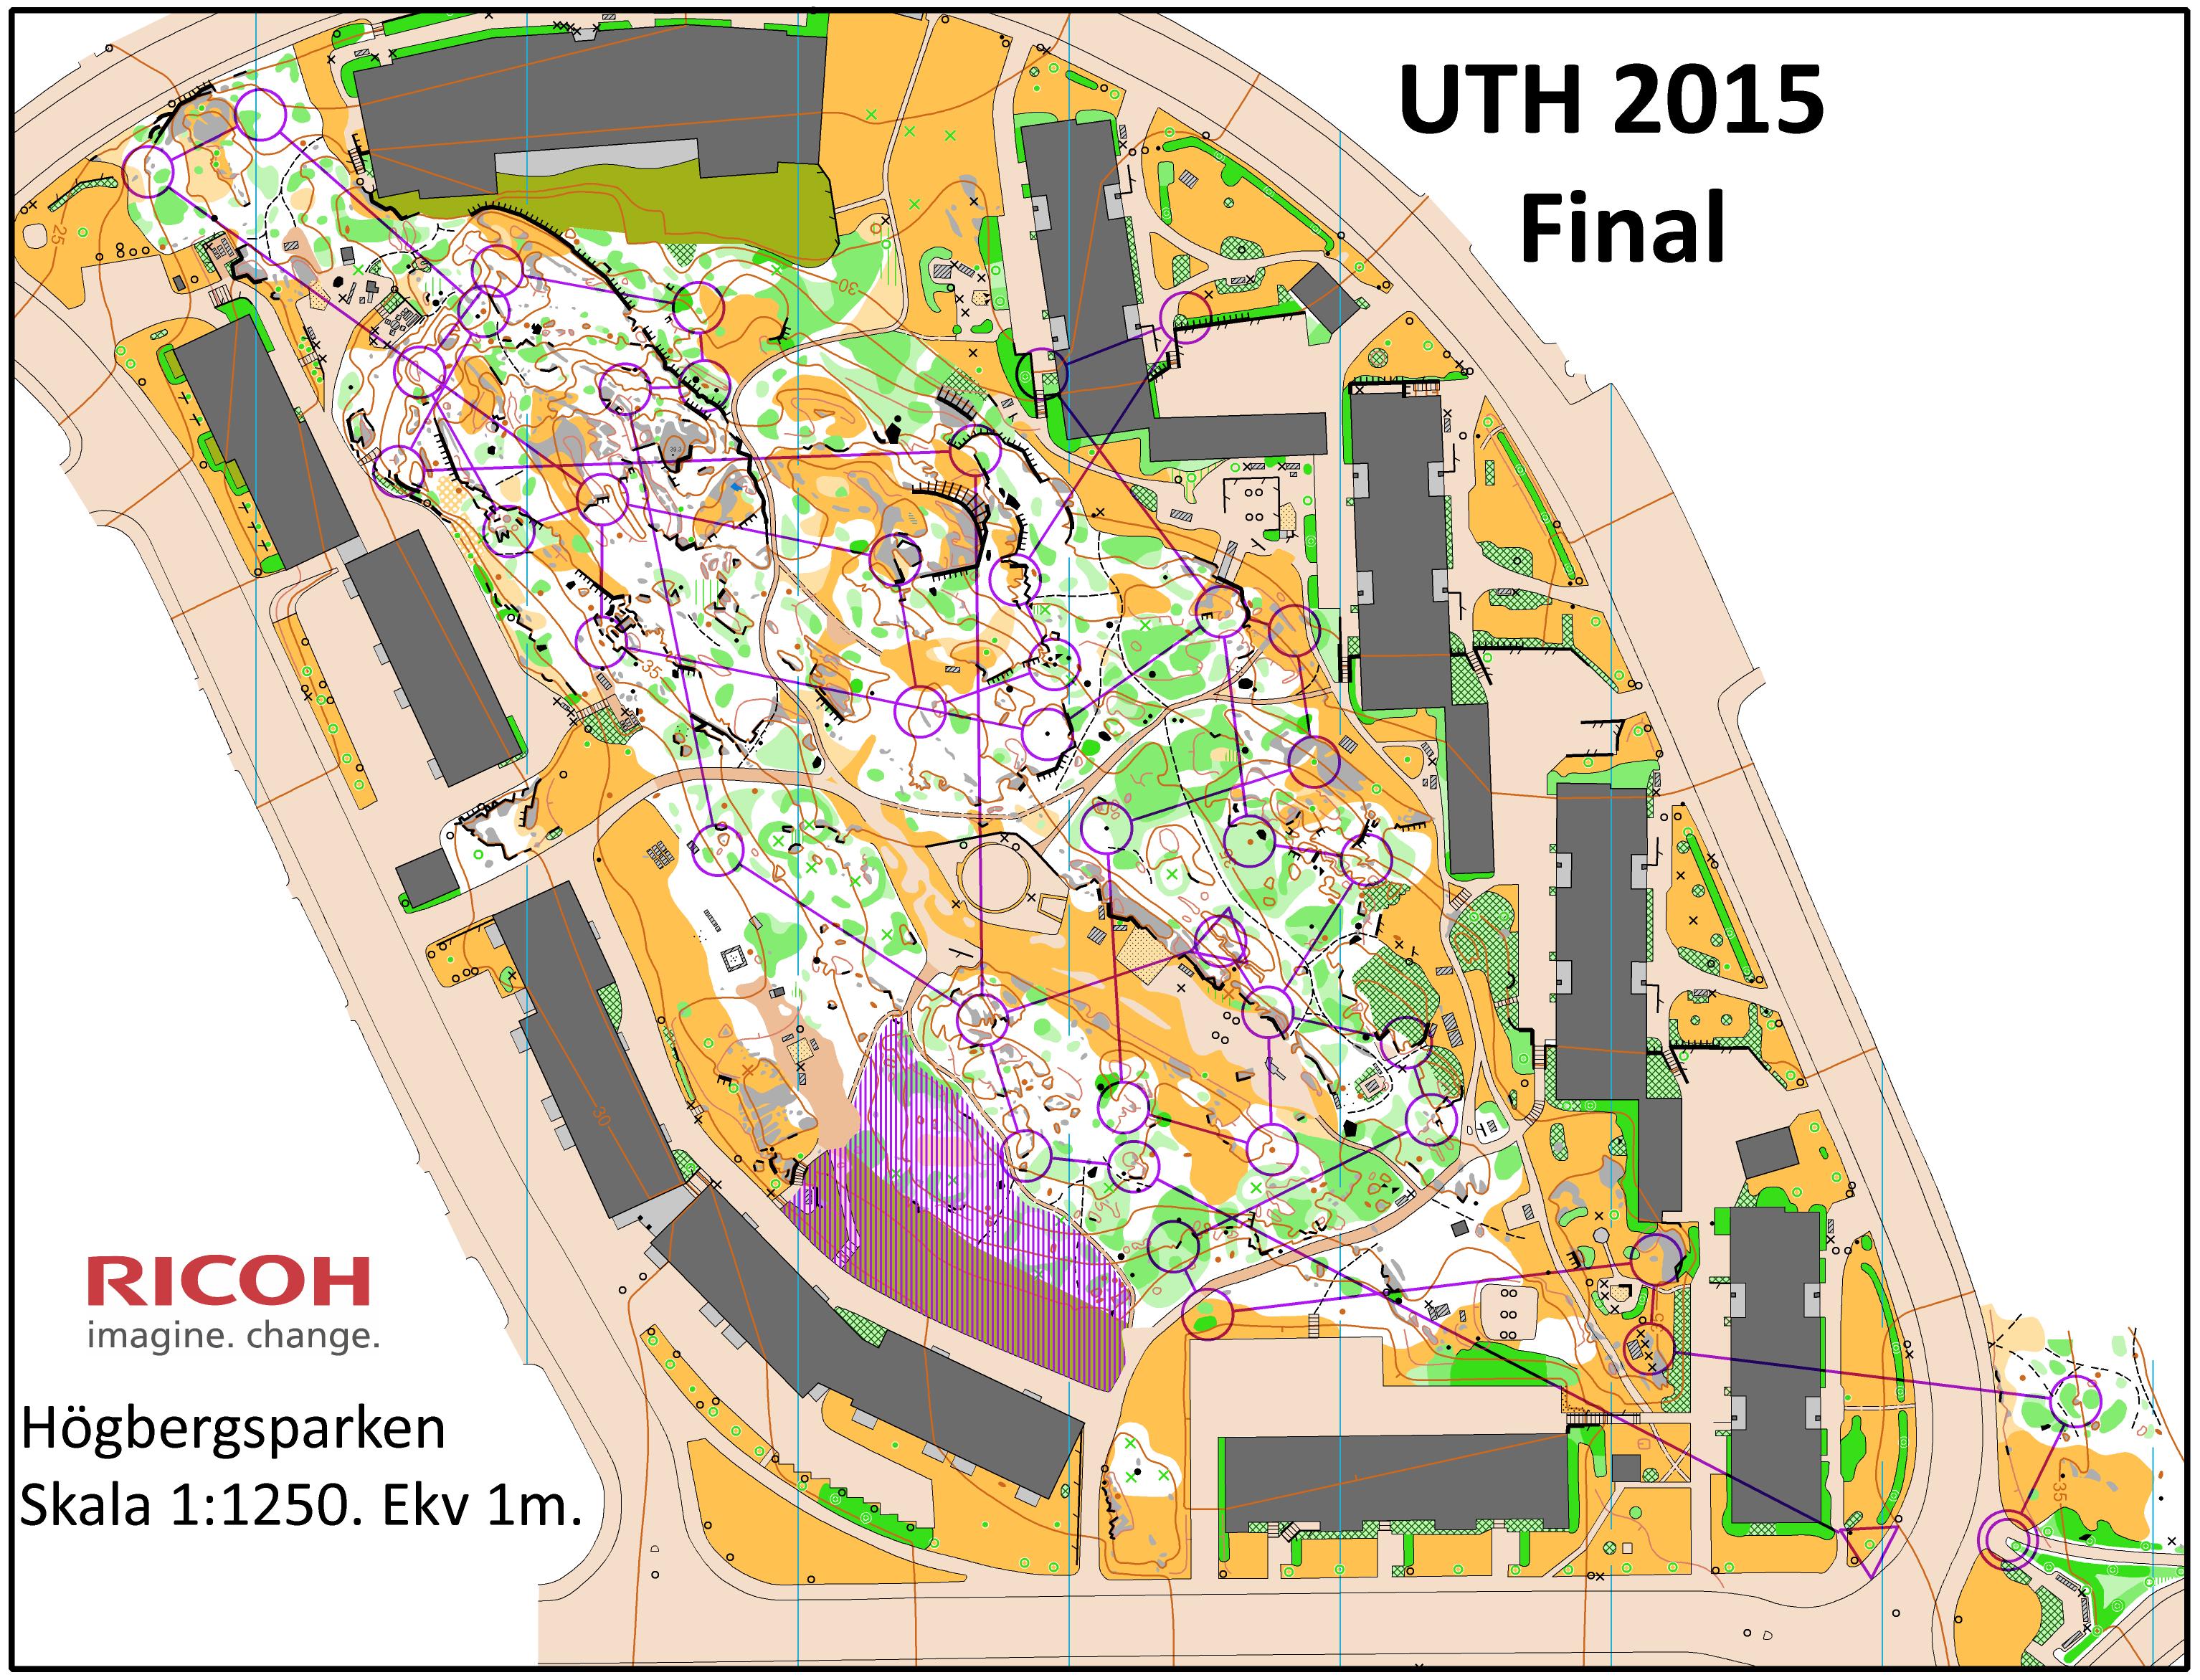 UTH15 - Ultrasprint (05/12/2015)